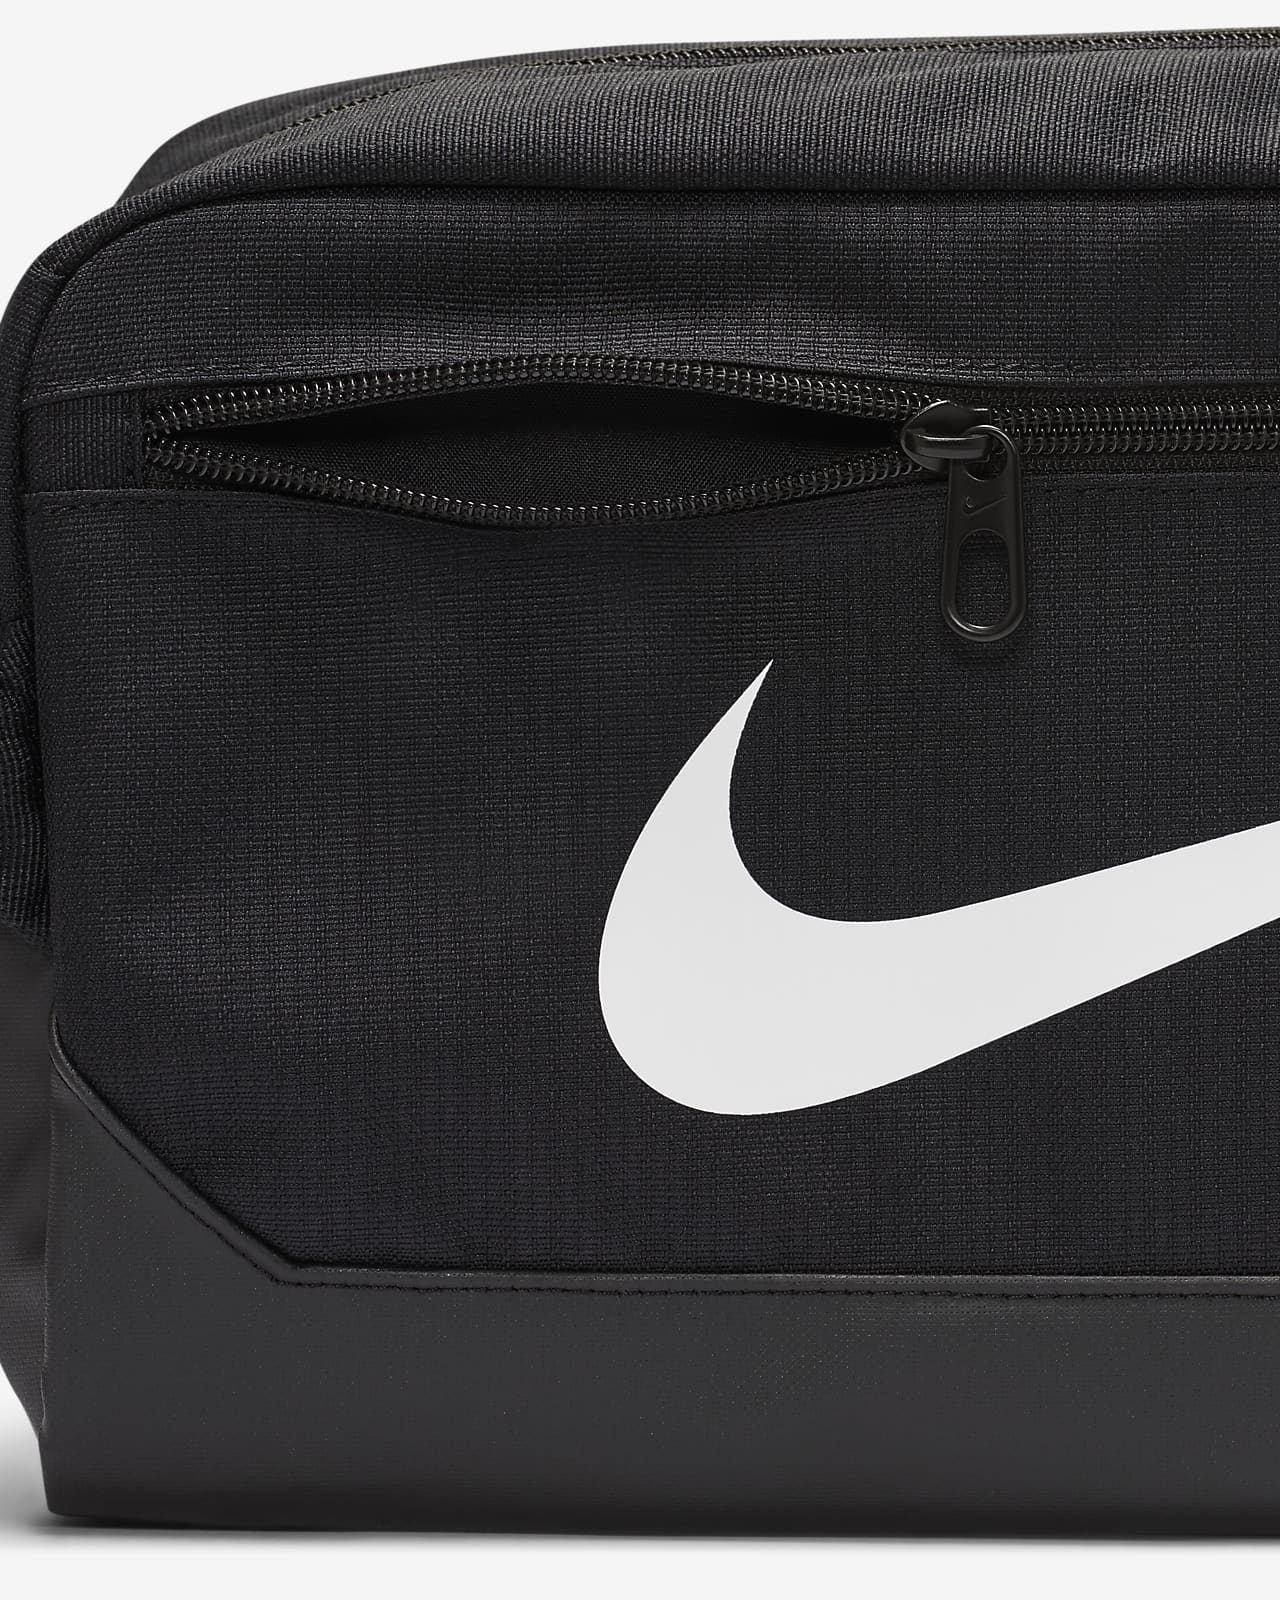 Nike 26L tote bag in black | ASOS